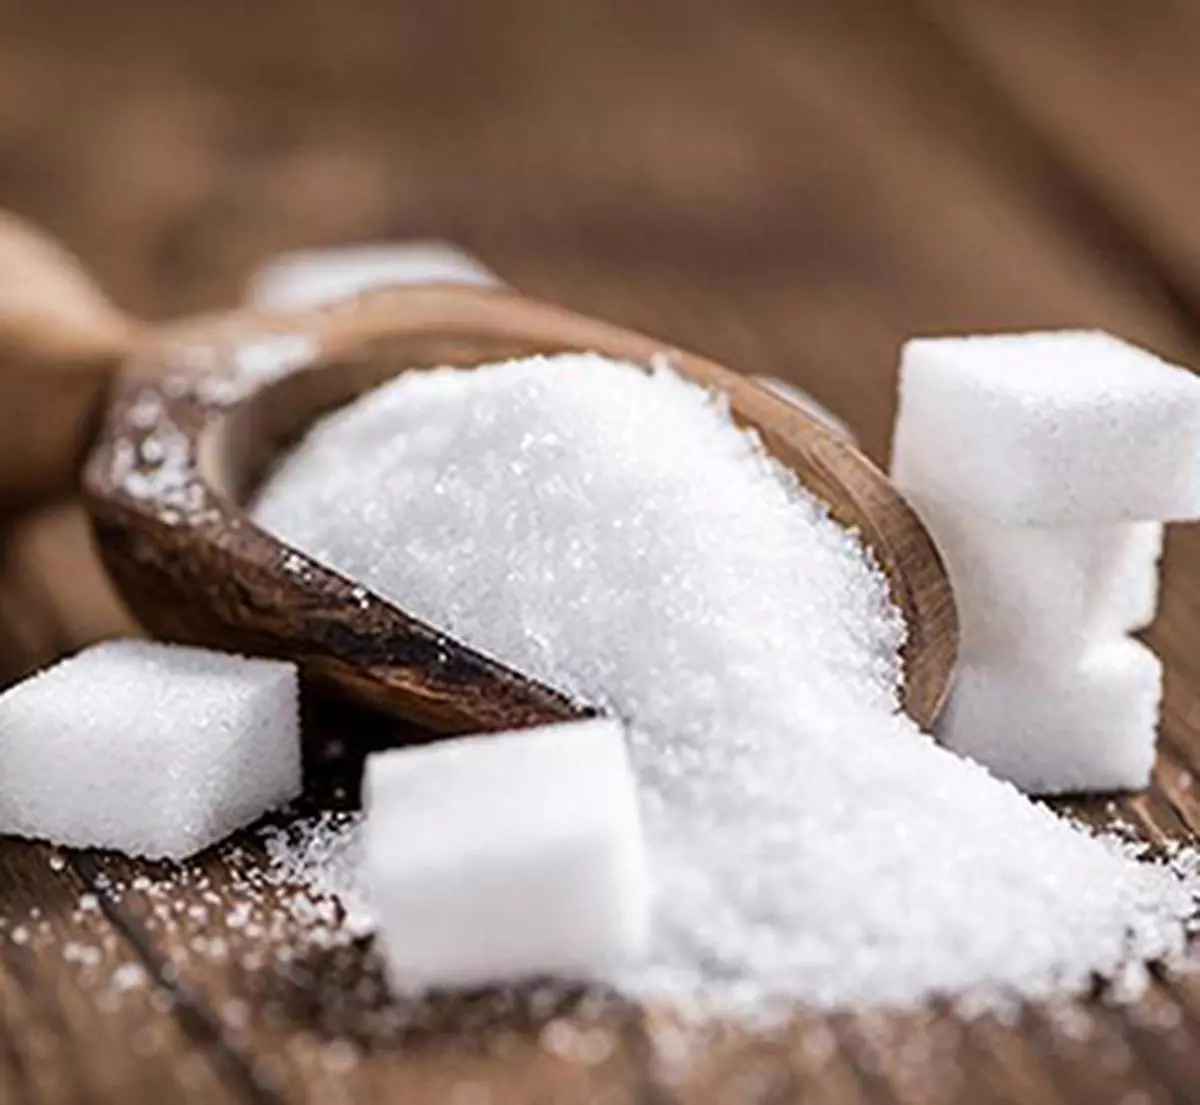 2 reasons why India may not cap sugar exports this season - The Hindu  BusinessLine